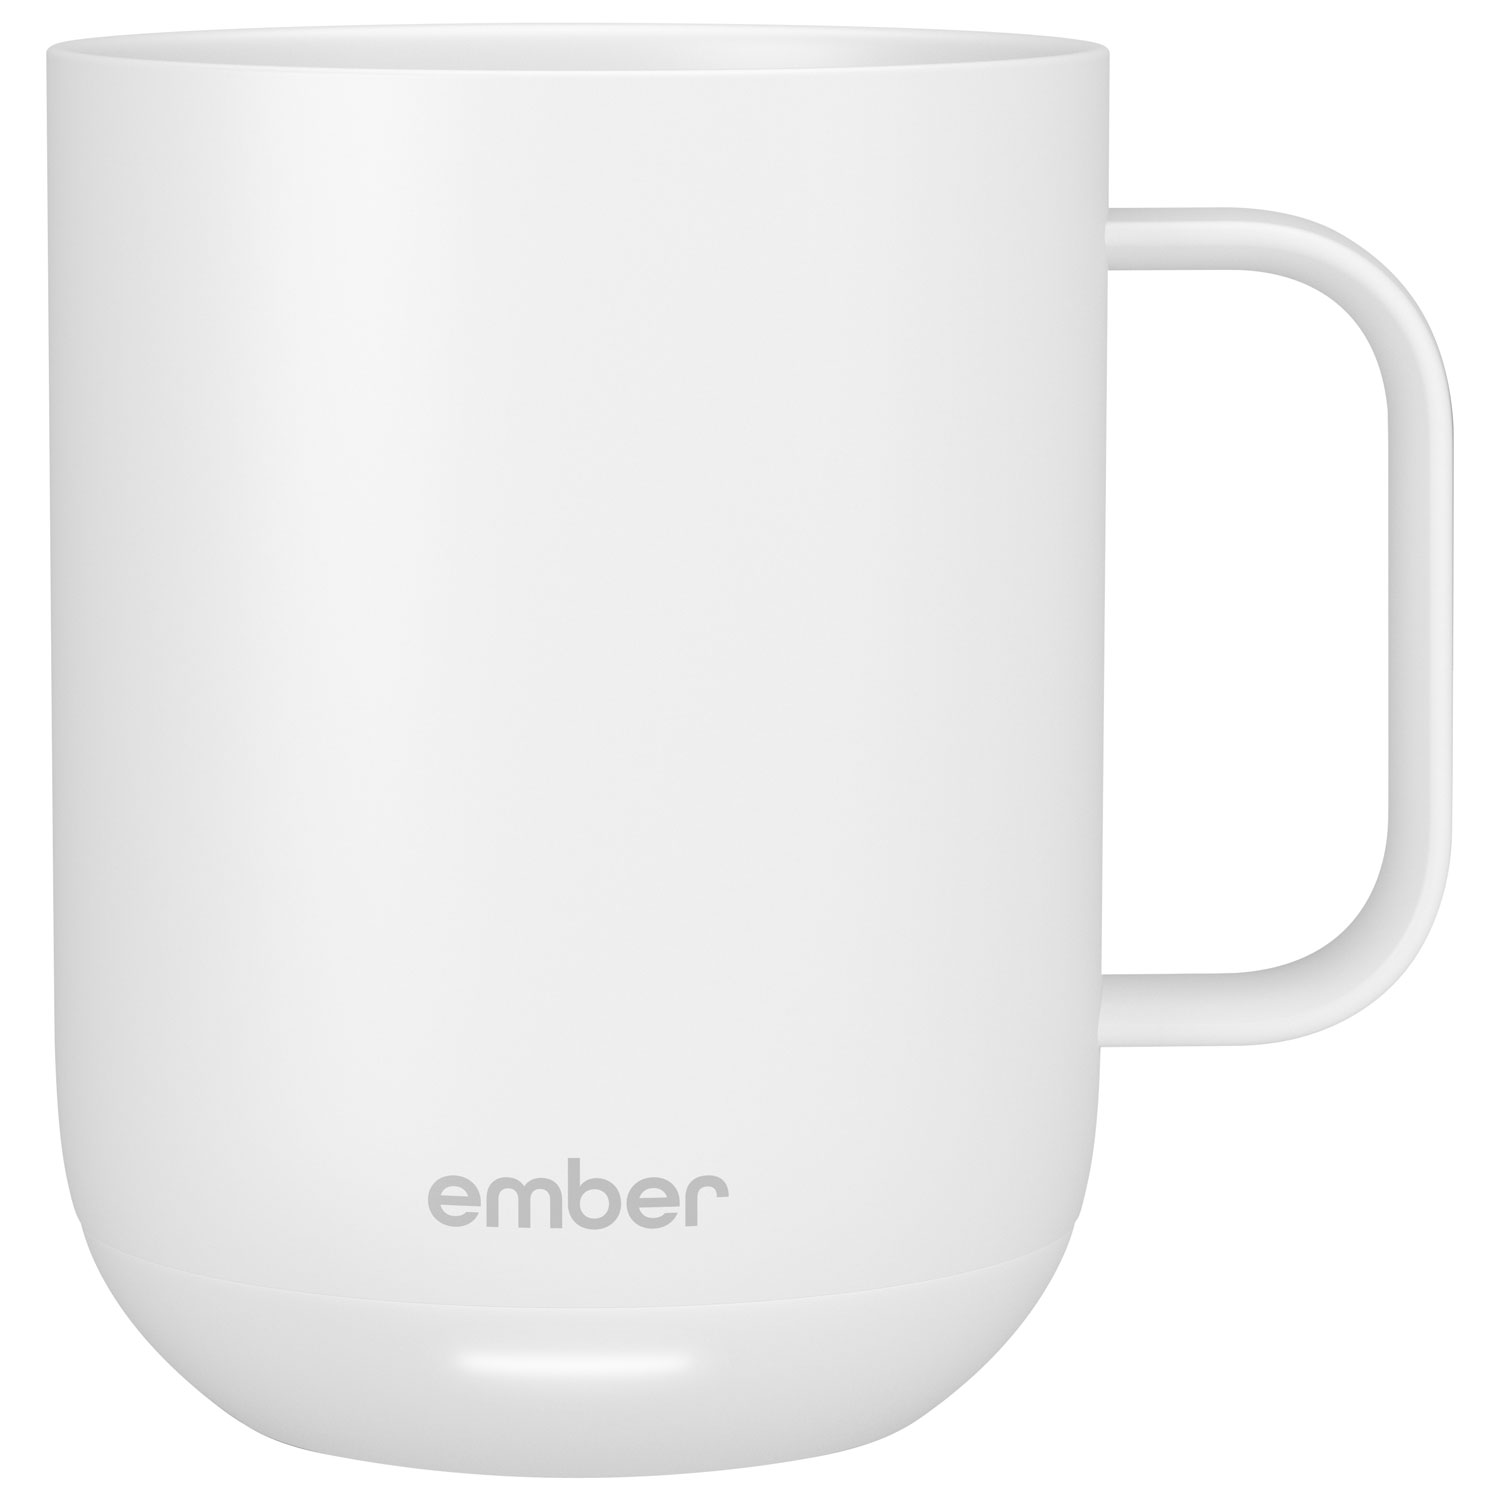 Ember 295ml (10 oz.) Smart Temperature Control Mug 2 - White